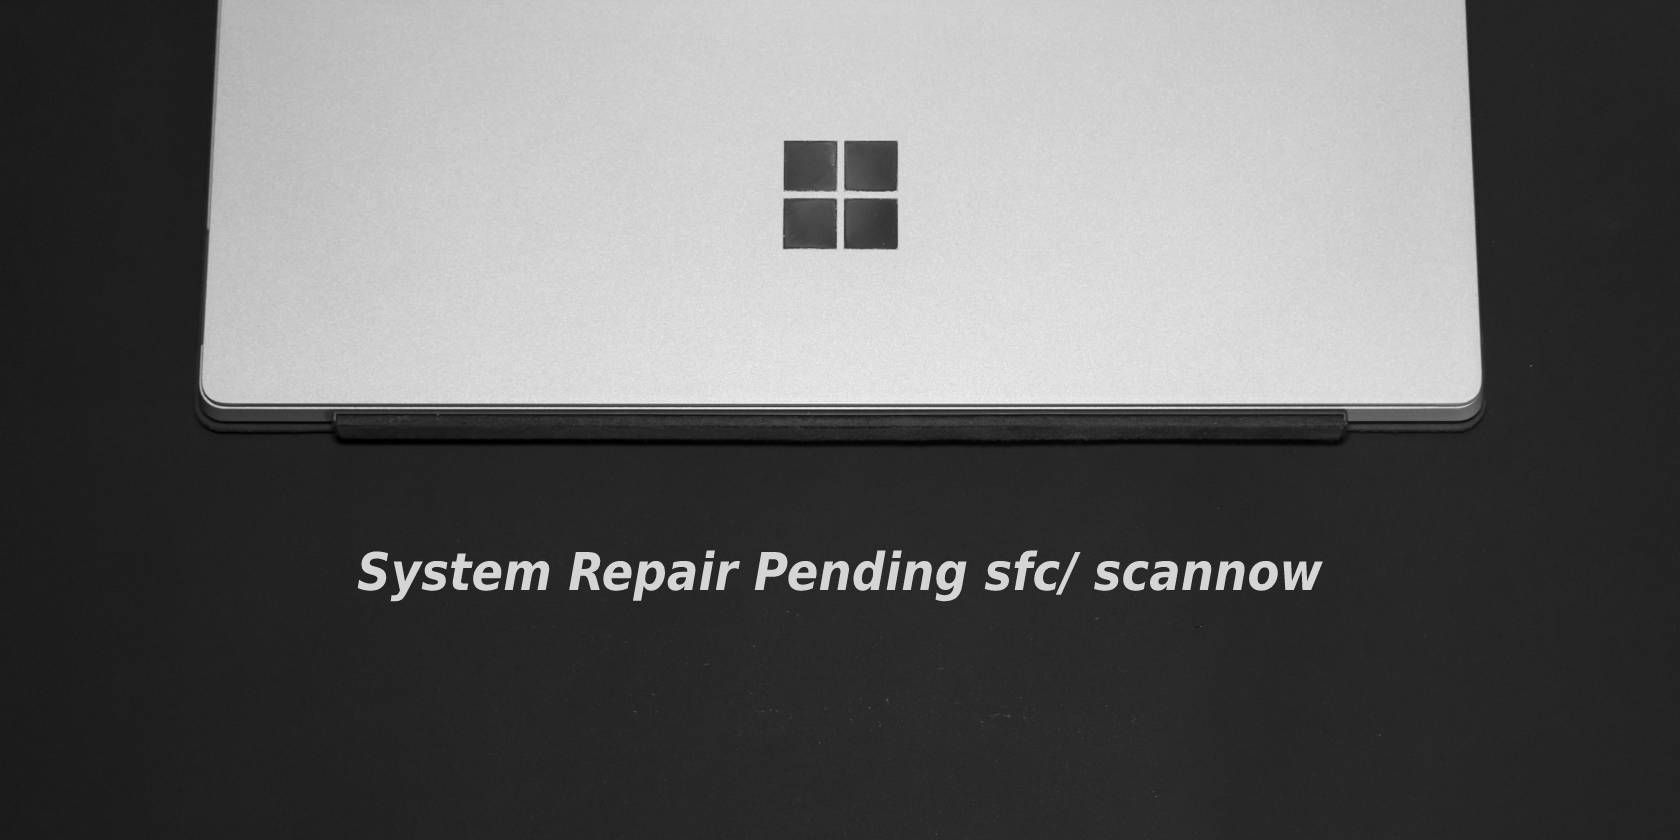 fix system repair pending windows